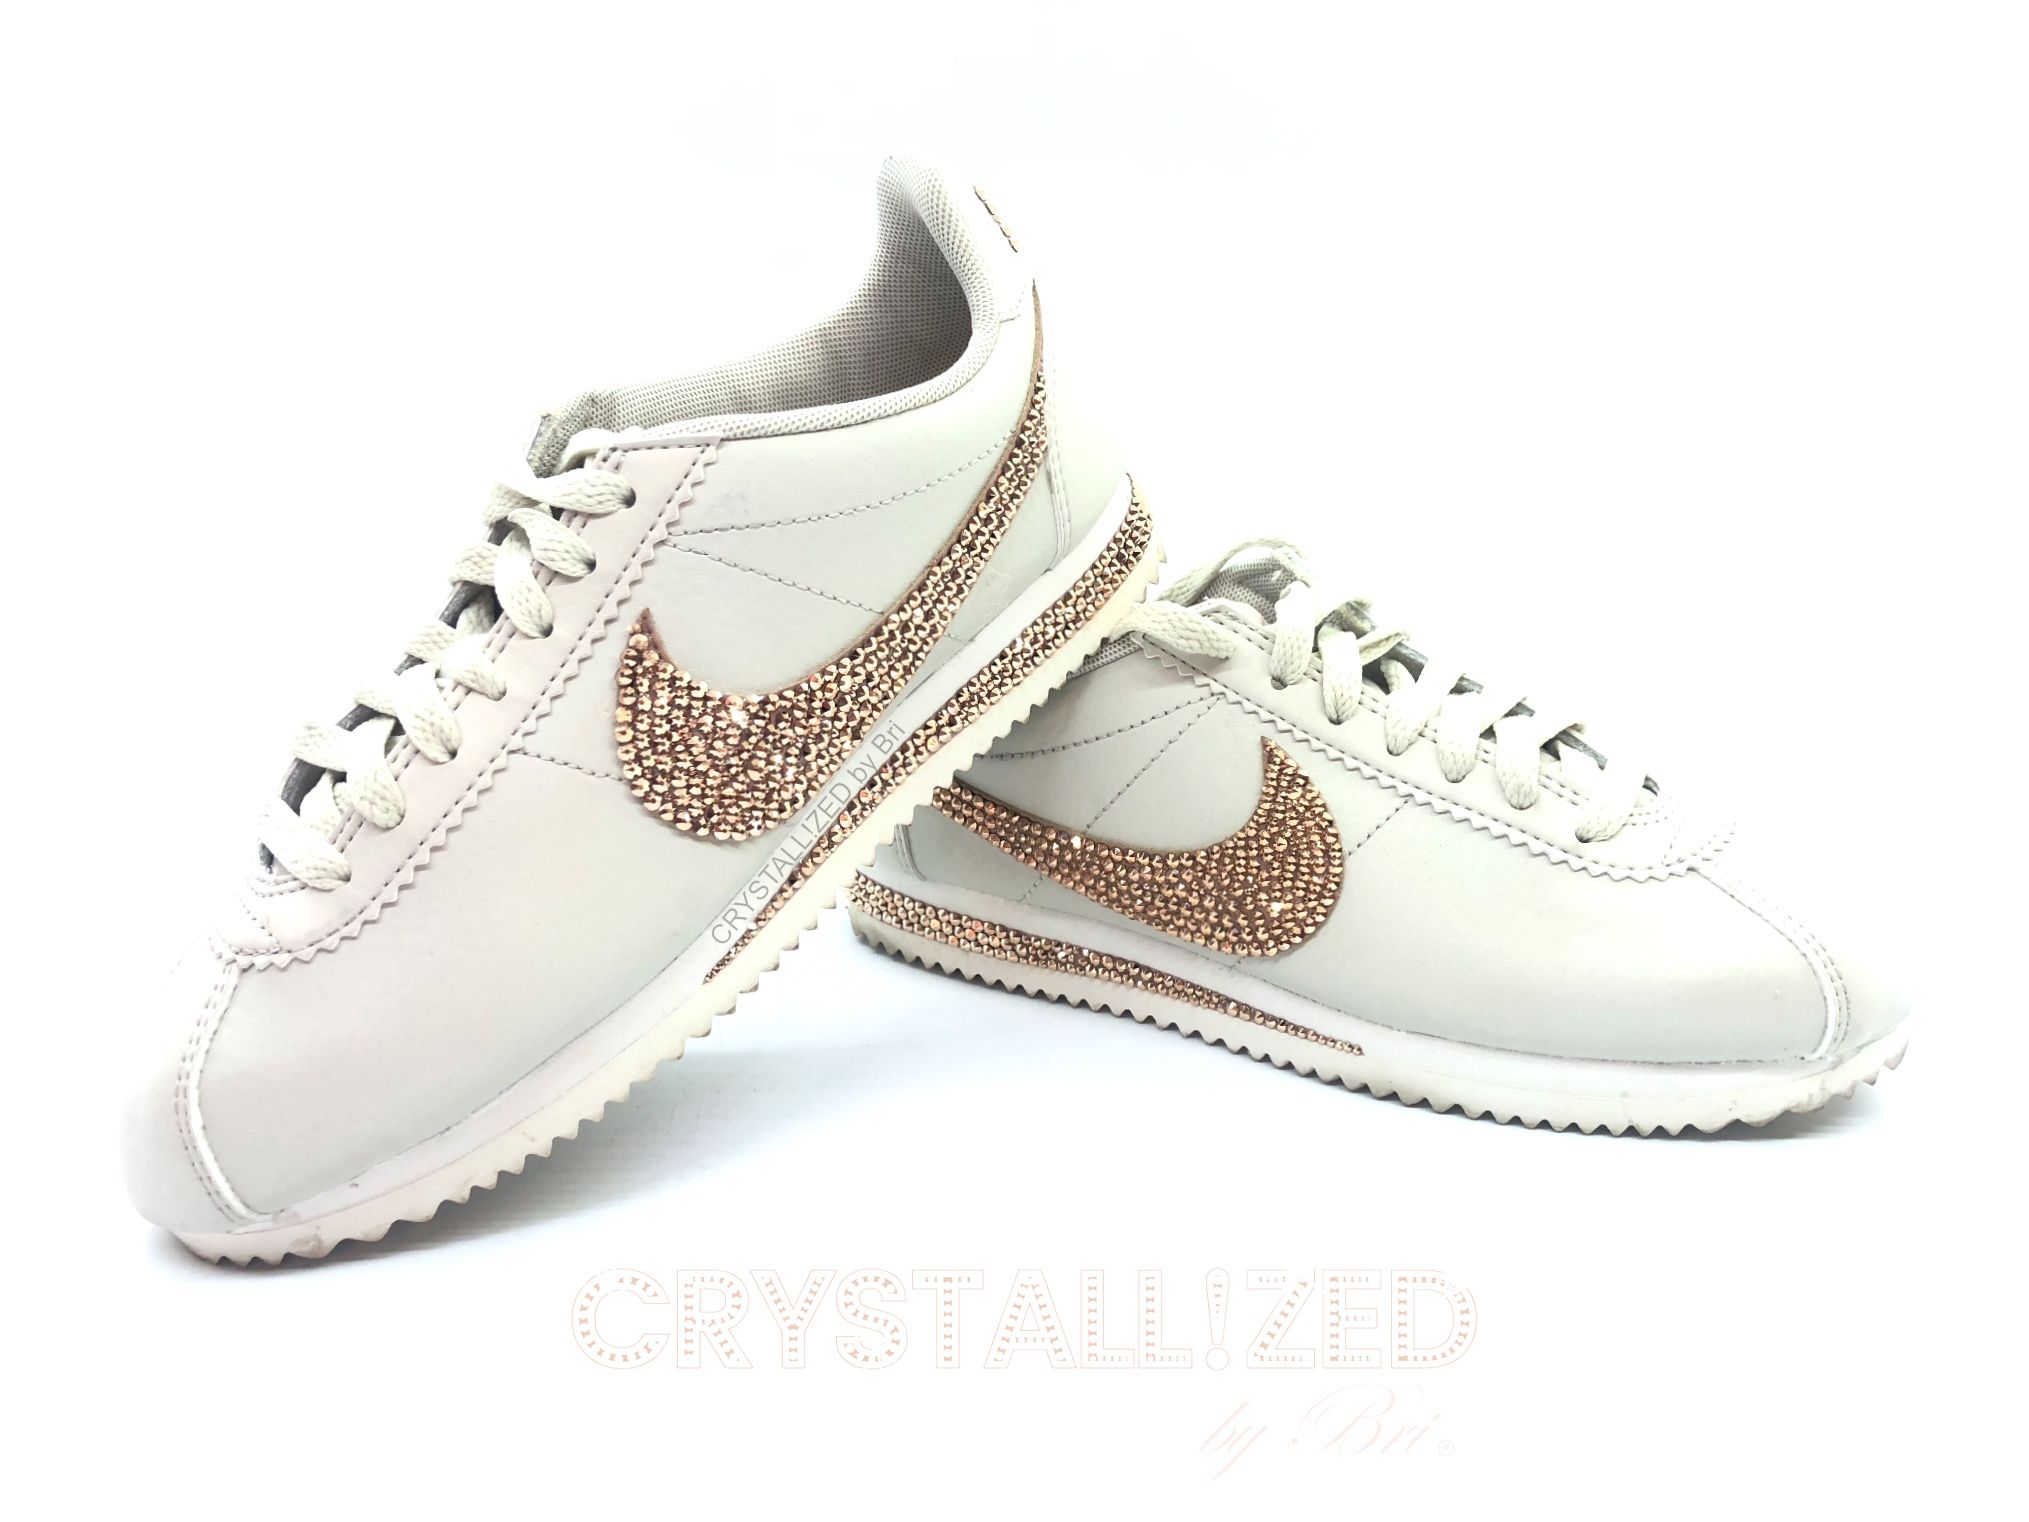 Custom Nike Cortez Women's Art Shoes Swarovski Crystals 